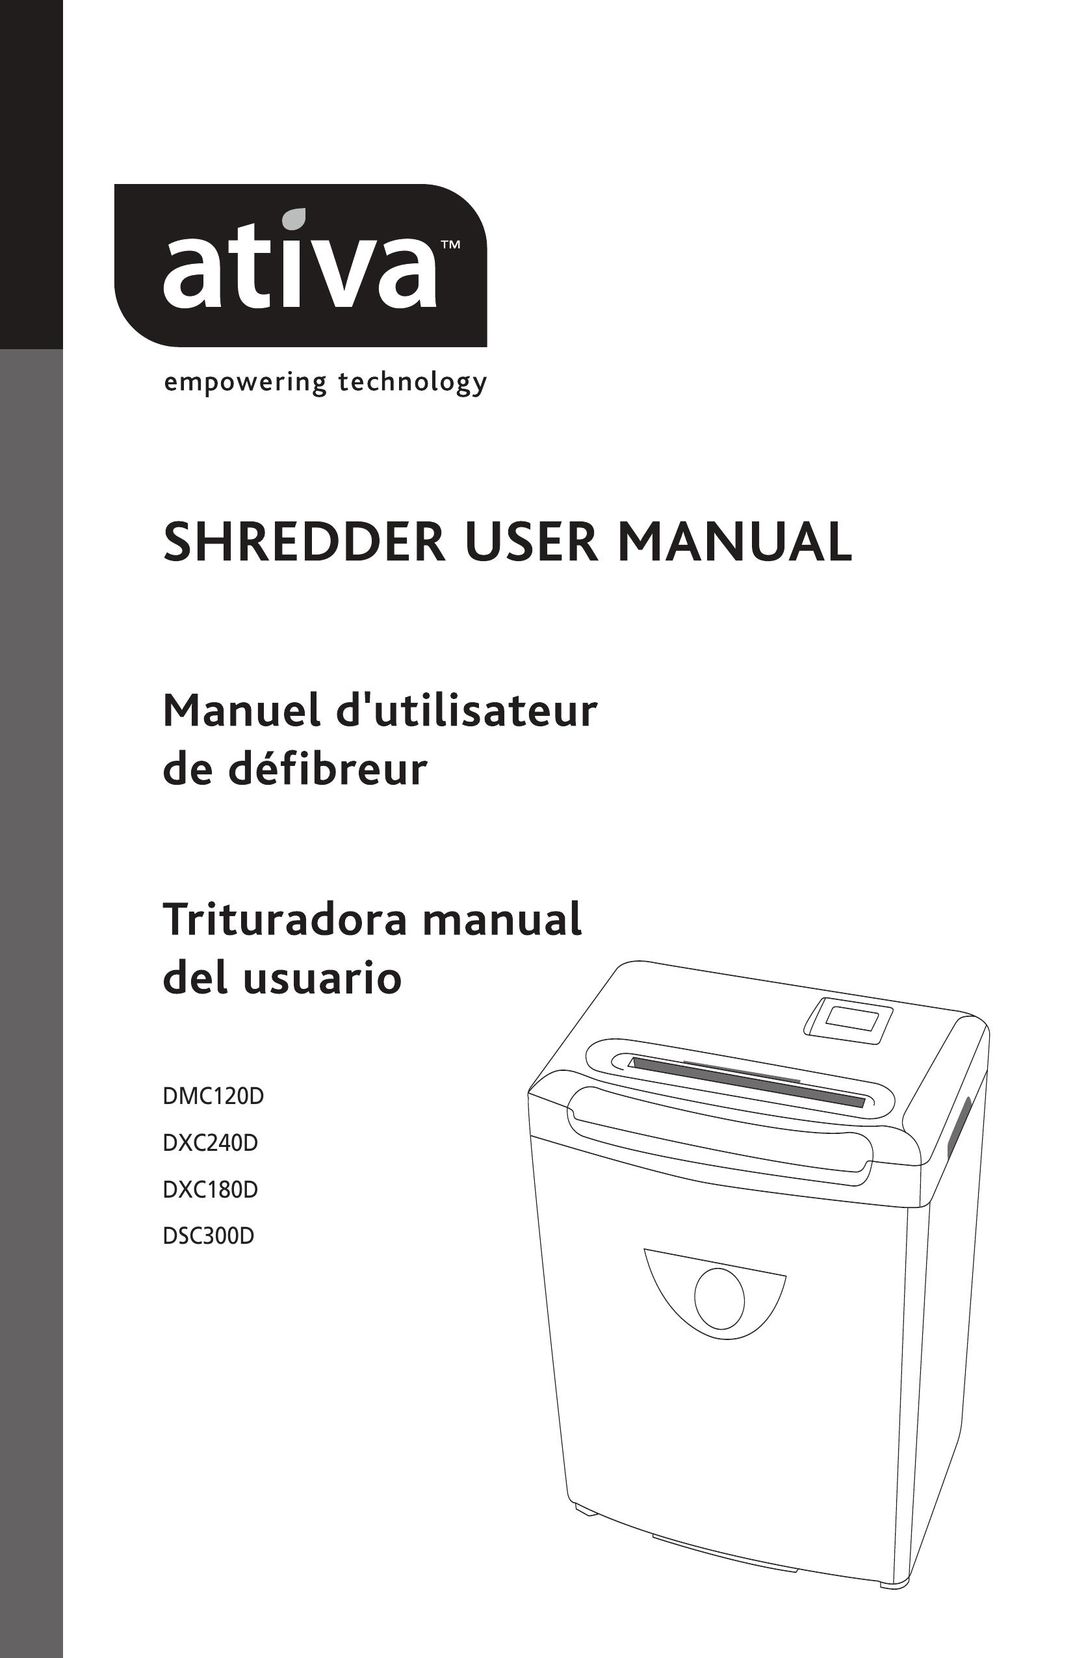 Ativa DXC180D Paper Shredder User Manual